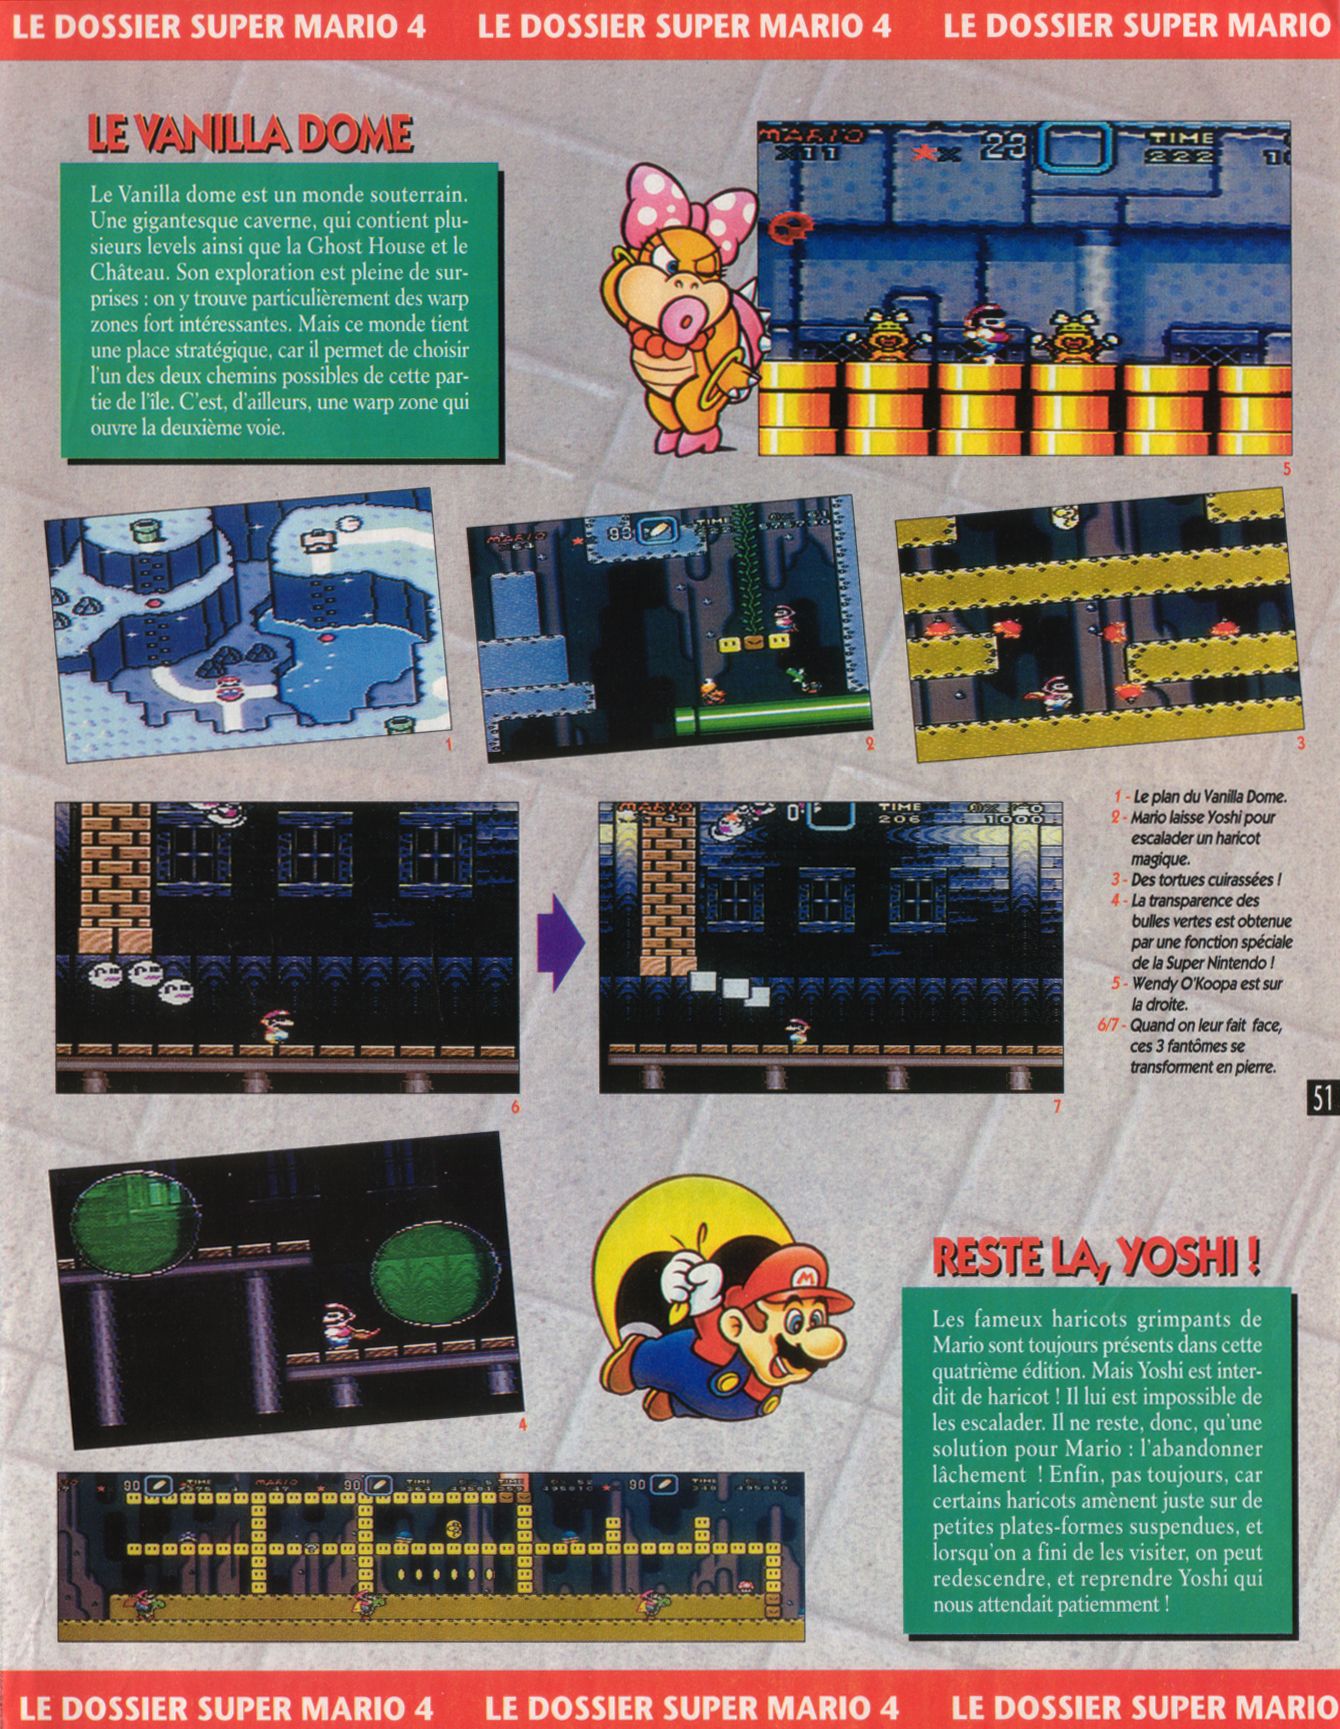 [TEST] Super Mario World (Super Famicom) Player%20One%20019%20-%20Page%20051%20%281992-04%29